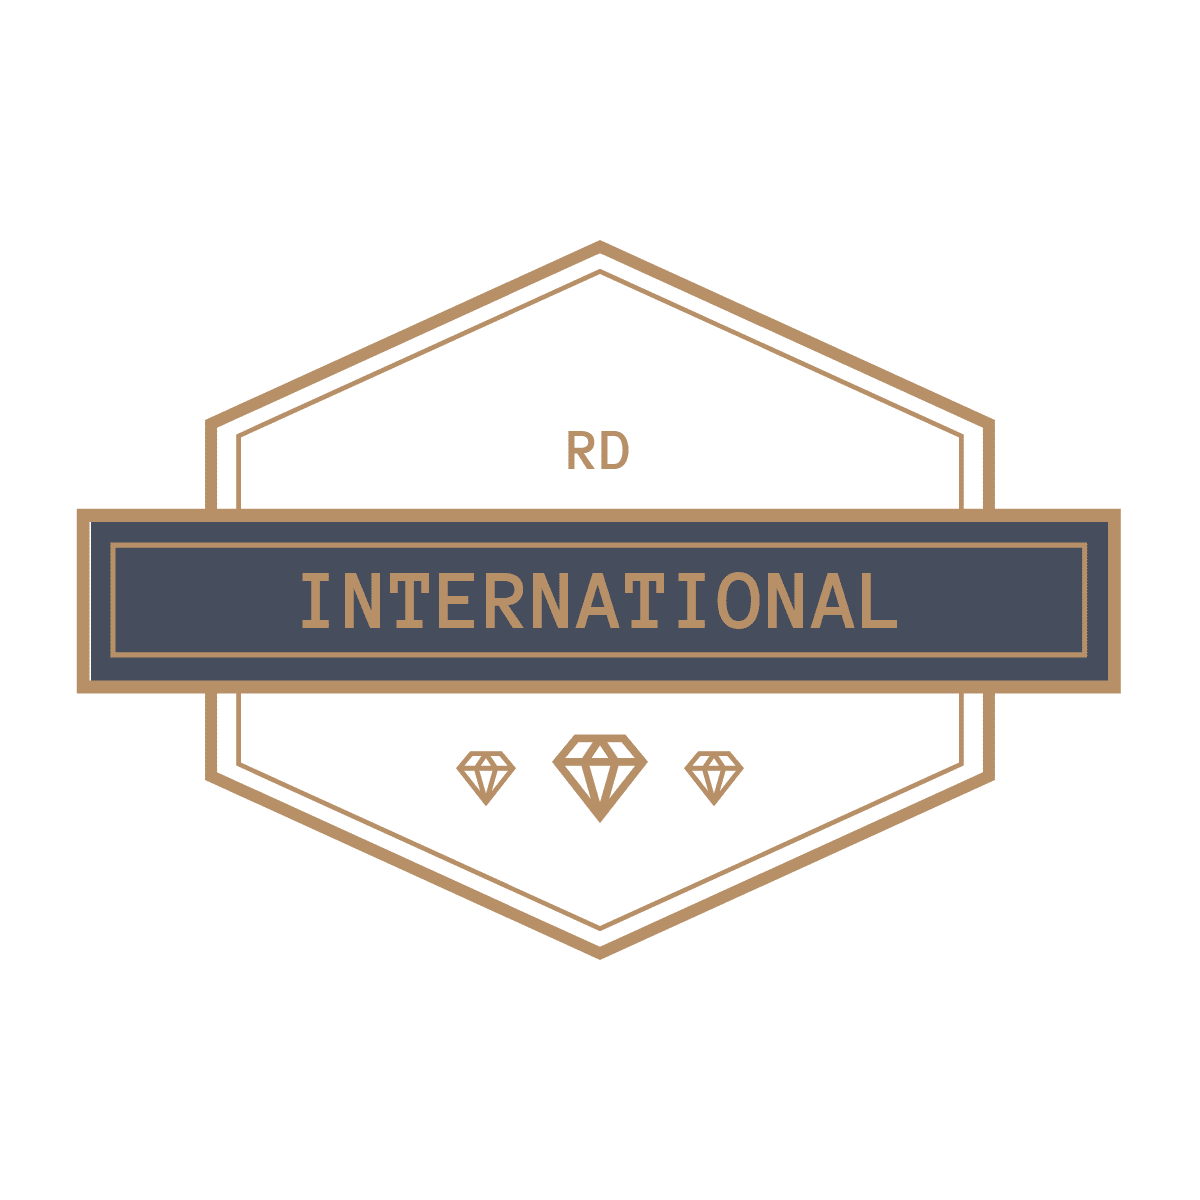 RD INTERNATIONAL